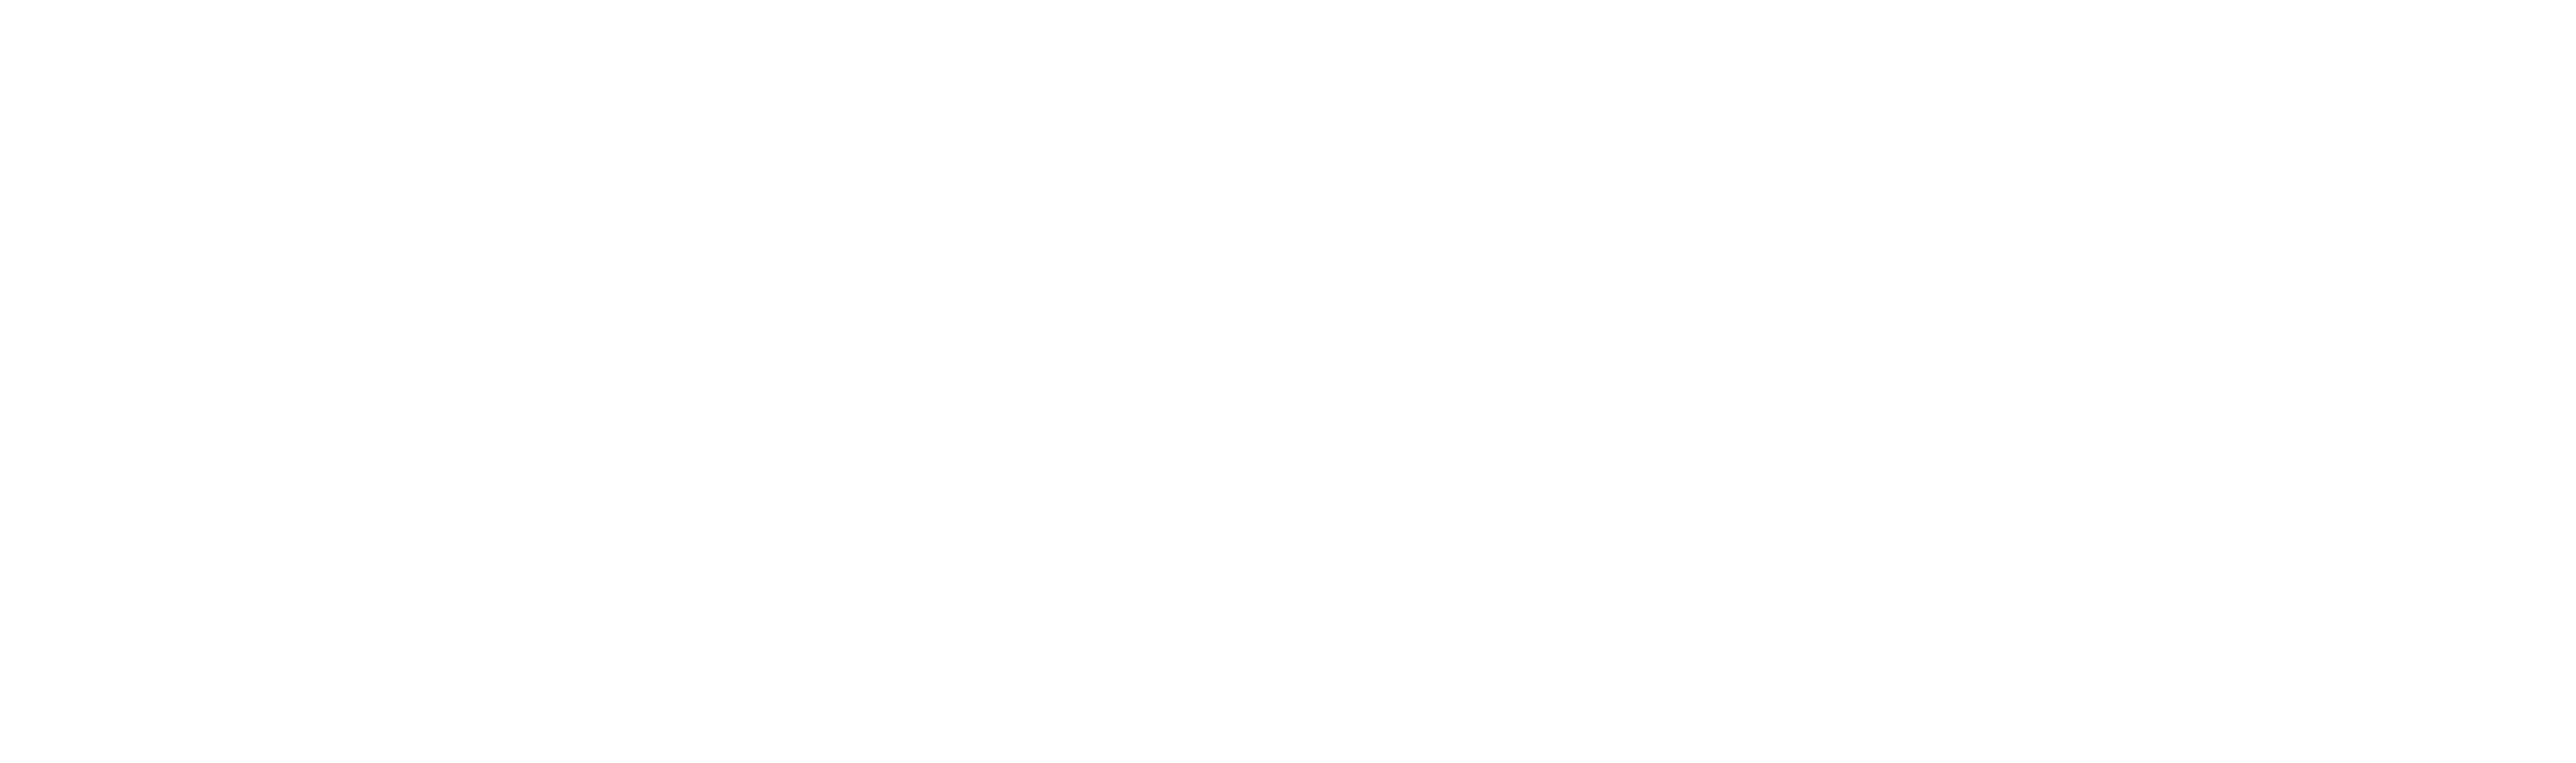 Virtualist